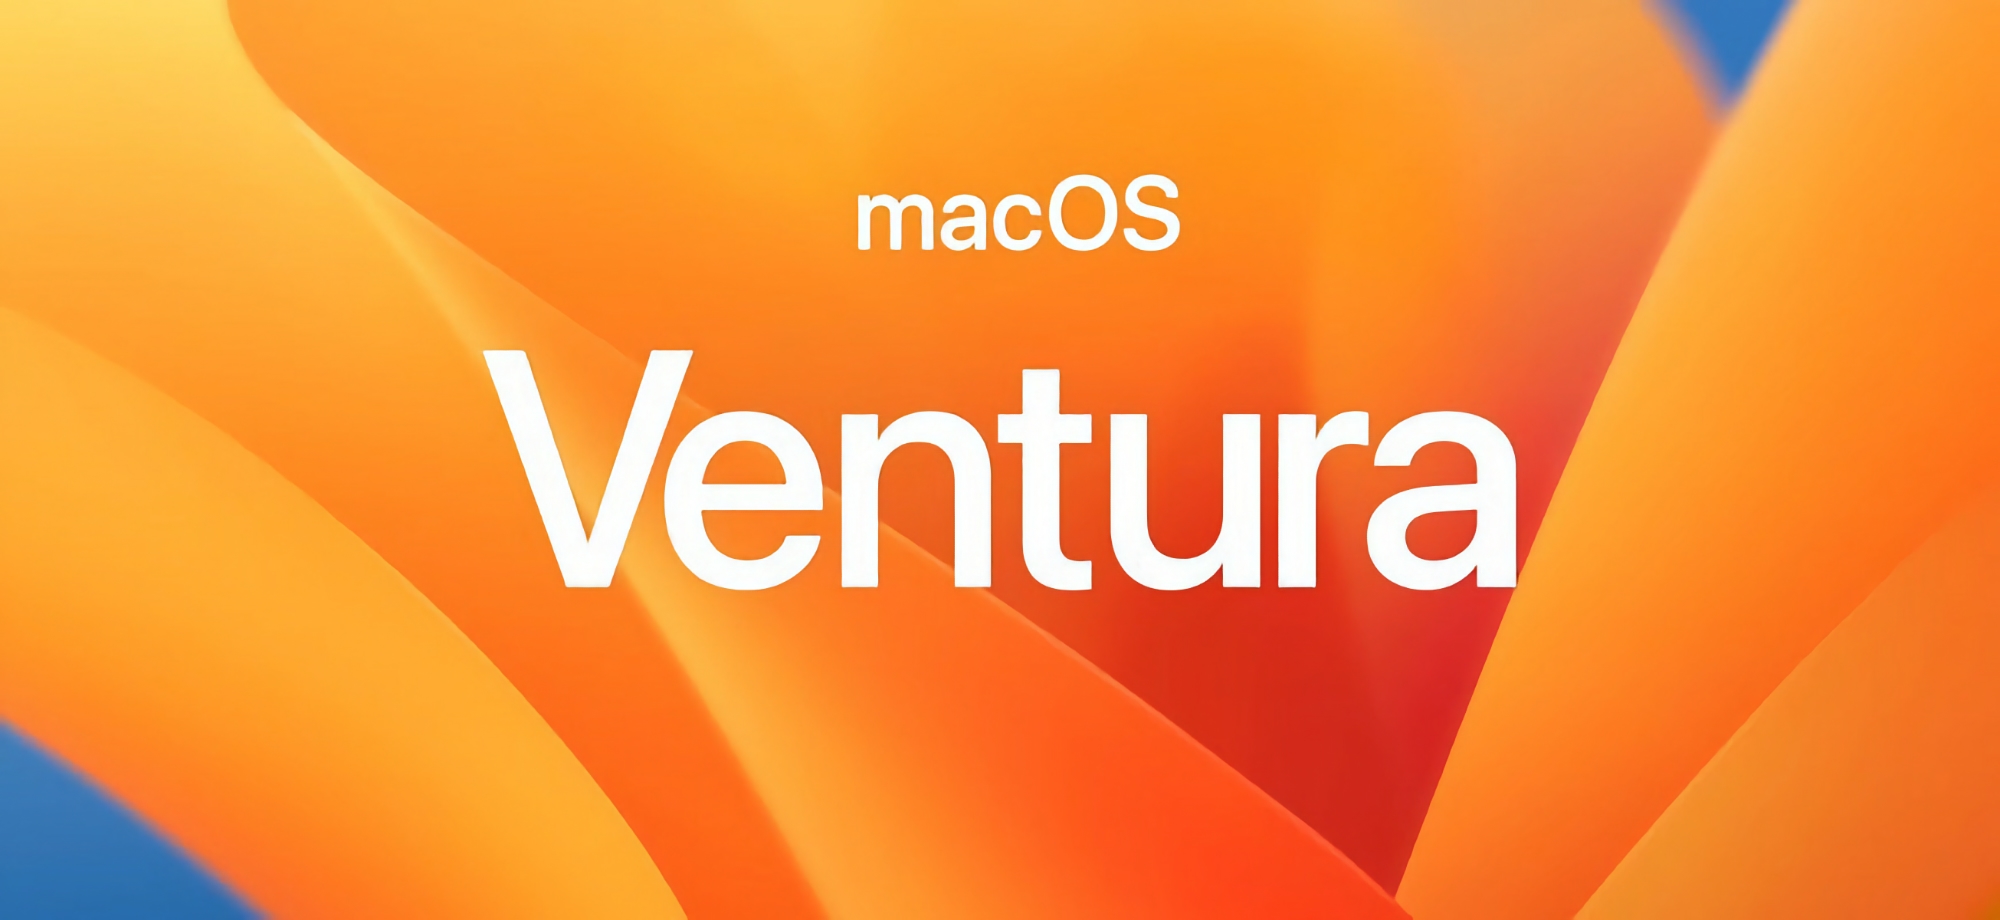 Po iOS 16.1.1 i iPadOS 16.1.1: Apple zapowiada aktualizację macOS Ventura 13.0.1